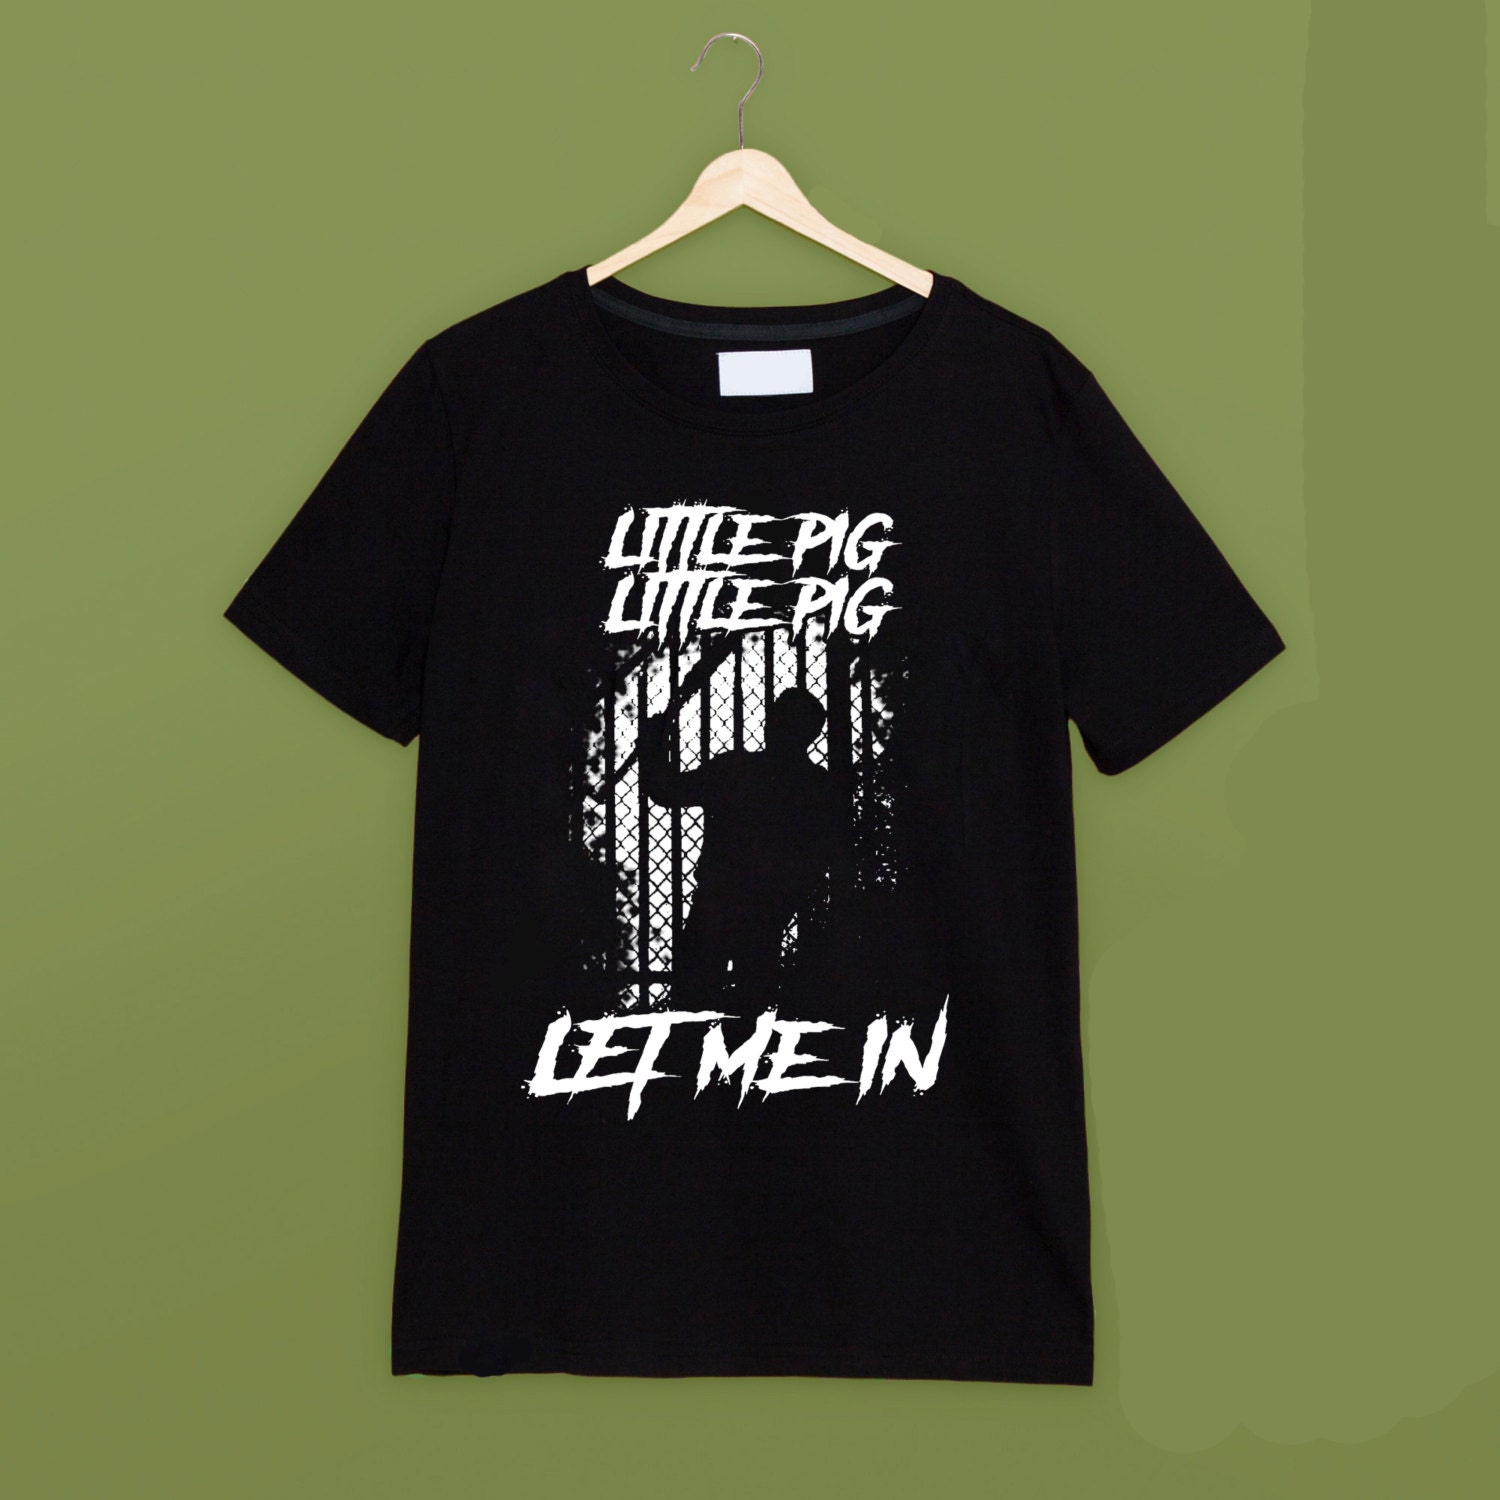 Little Pig Little Pig Let Me In Negan T-Shirt - Little Pig - T ...